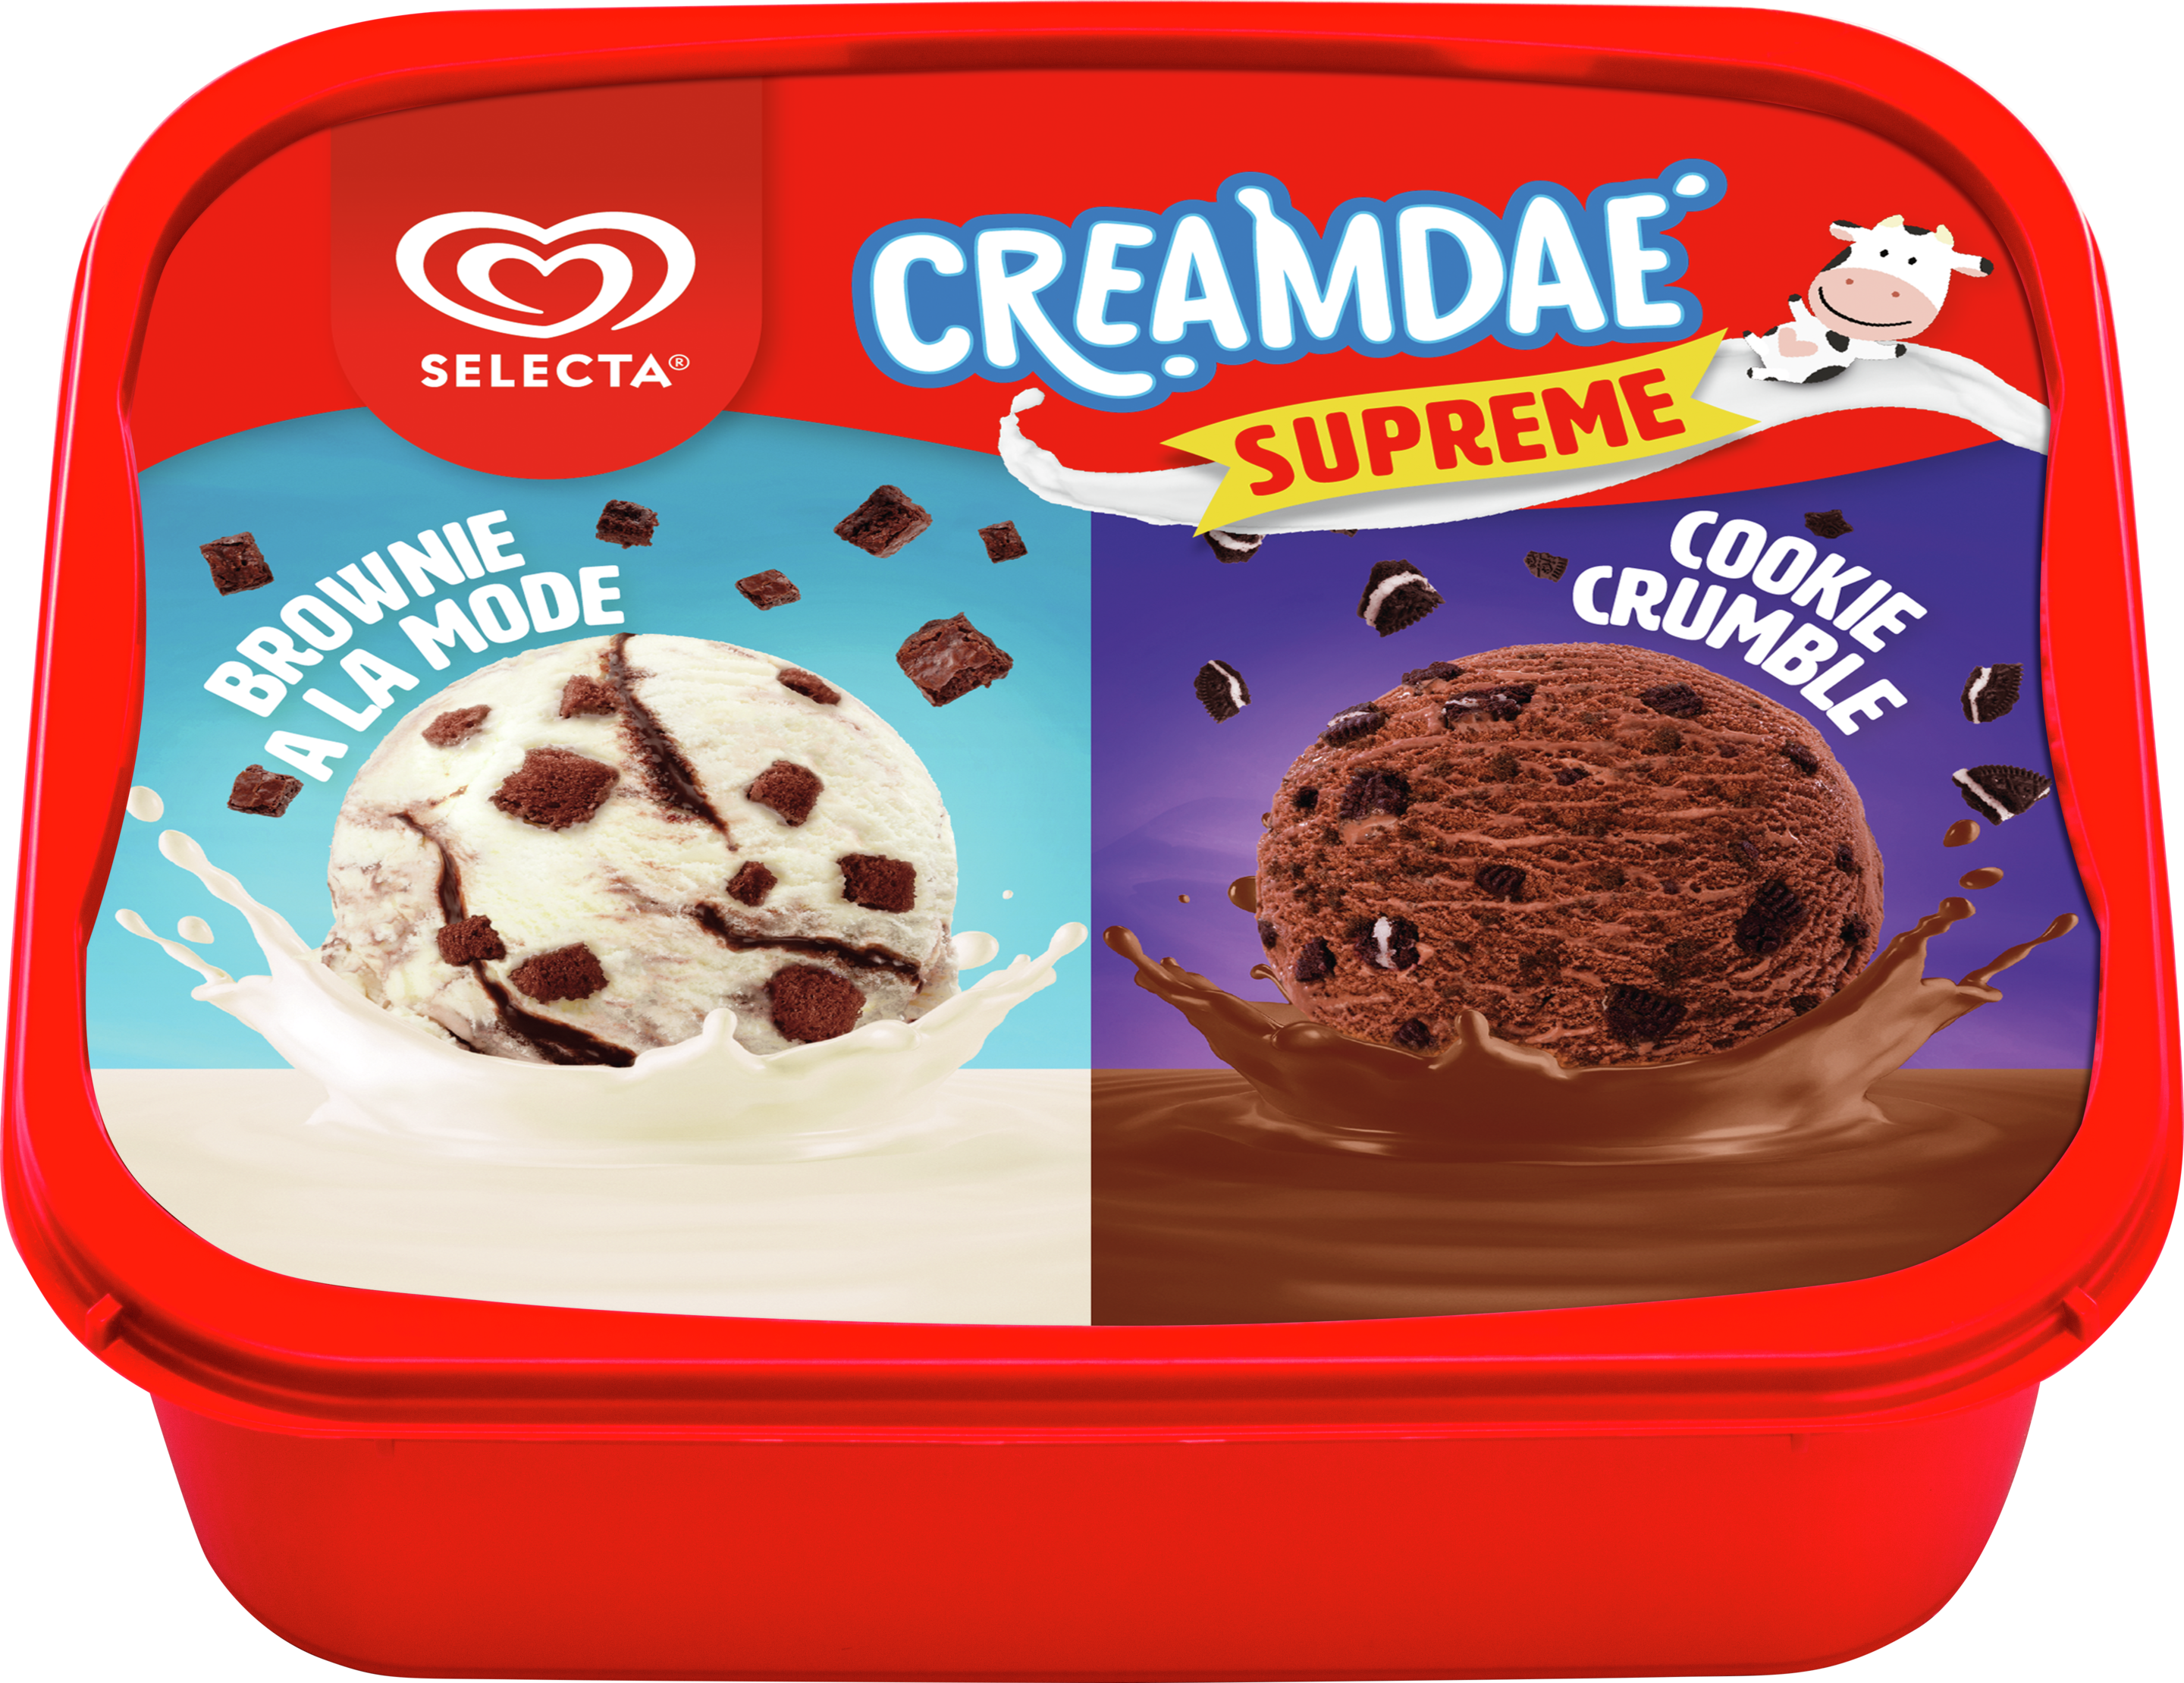 Selecta Creamdae Supreme 2in1 Brownie Ala Mode - Cookie Crumble